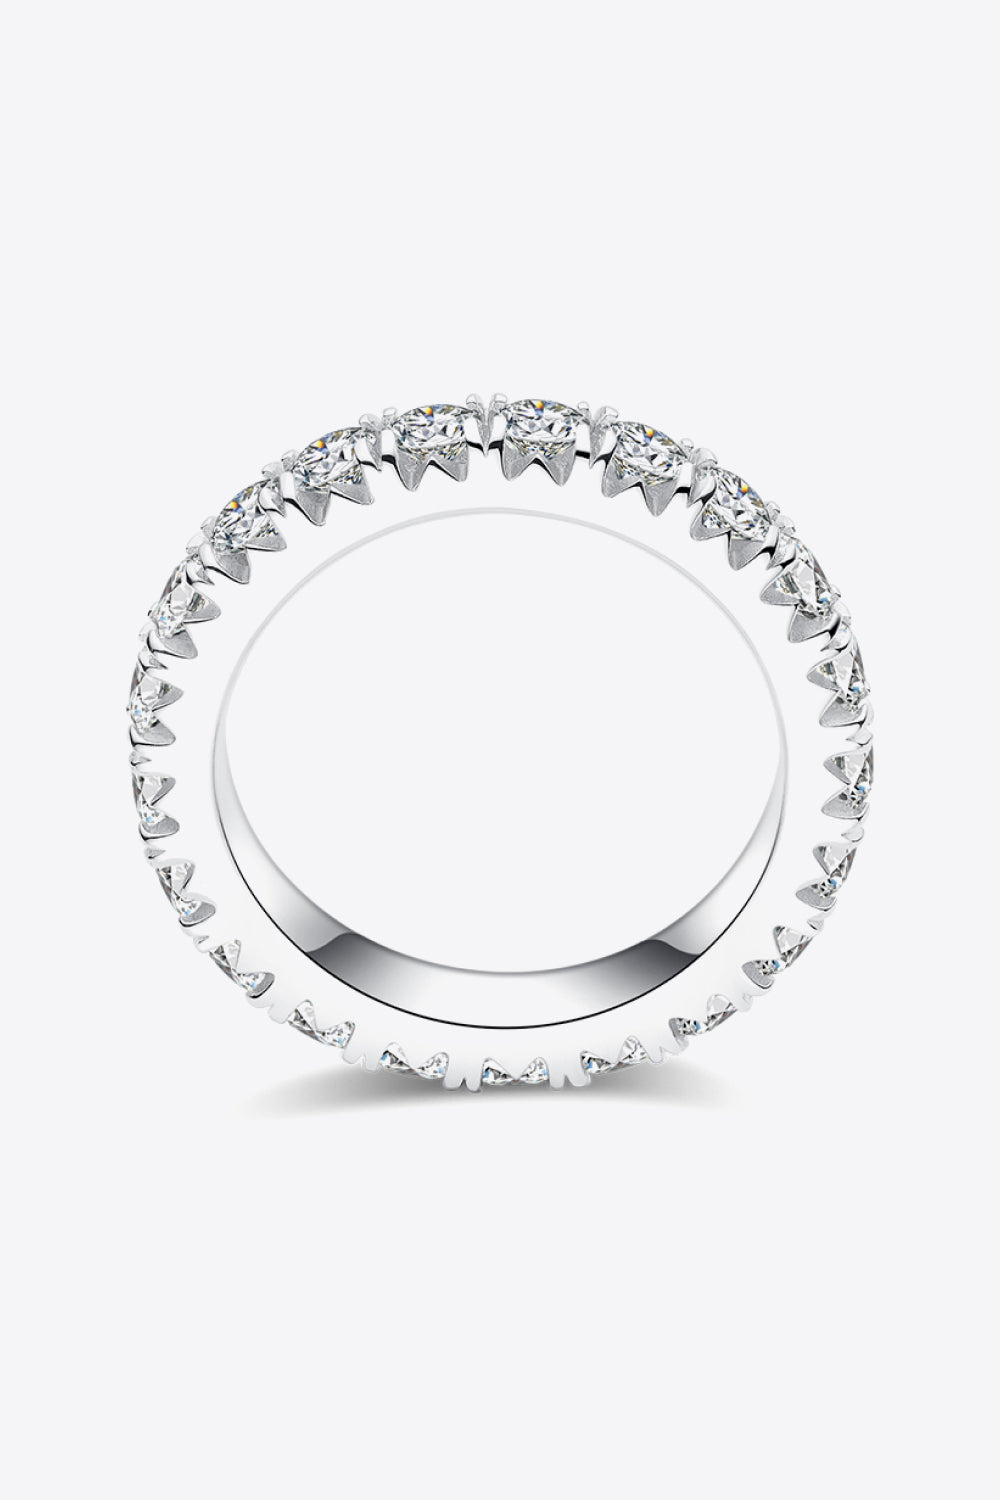 2.3 Carat Moissanite 925 Sterling Silver Eternity Ring